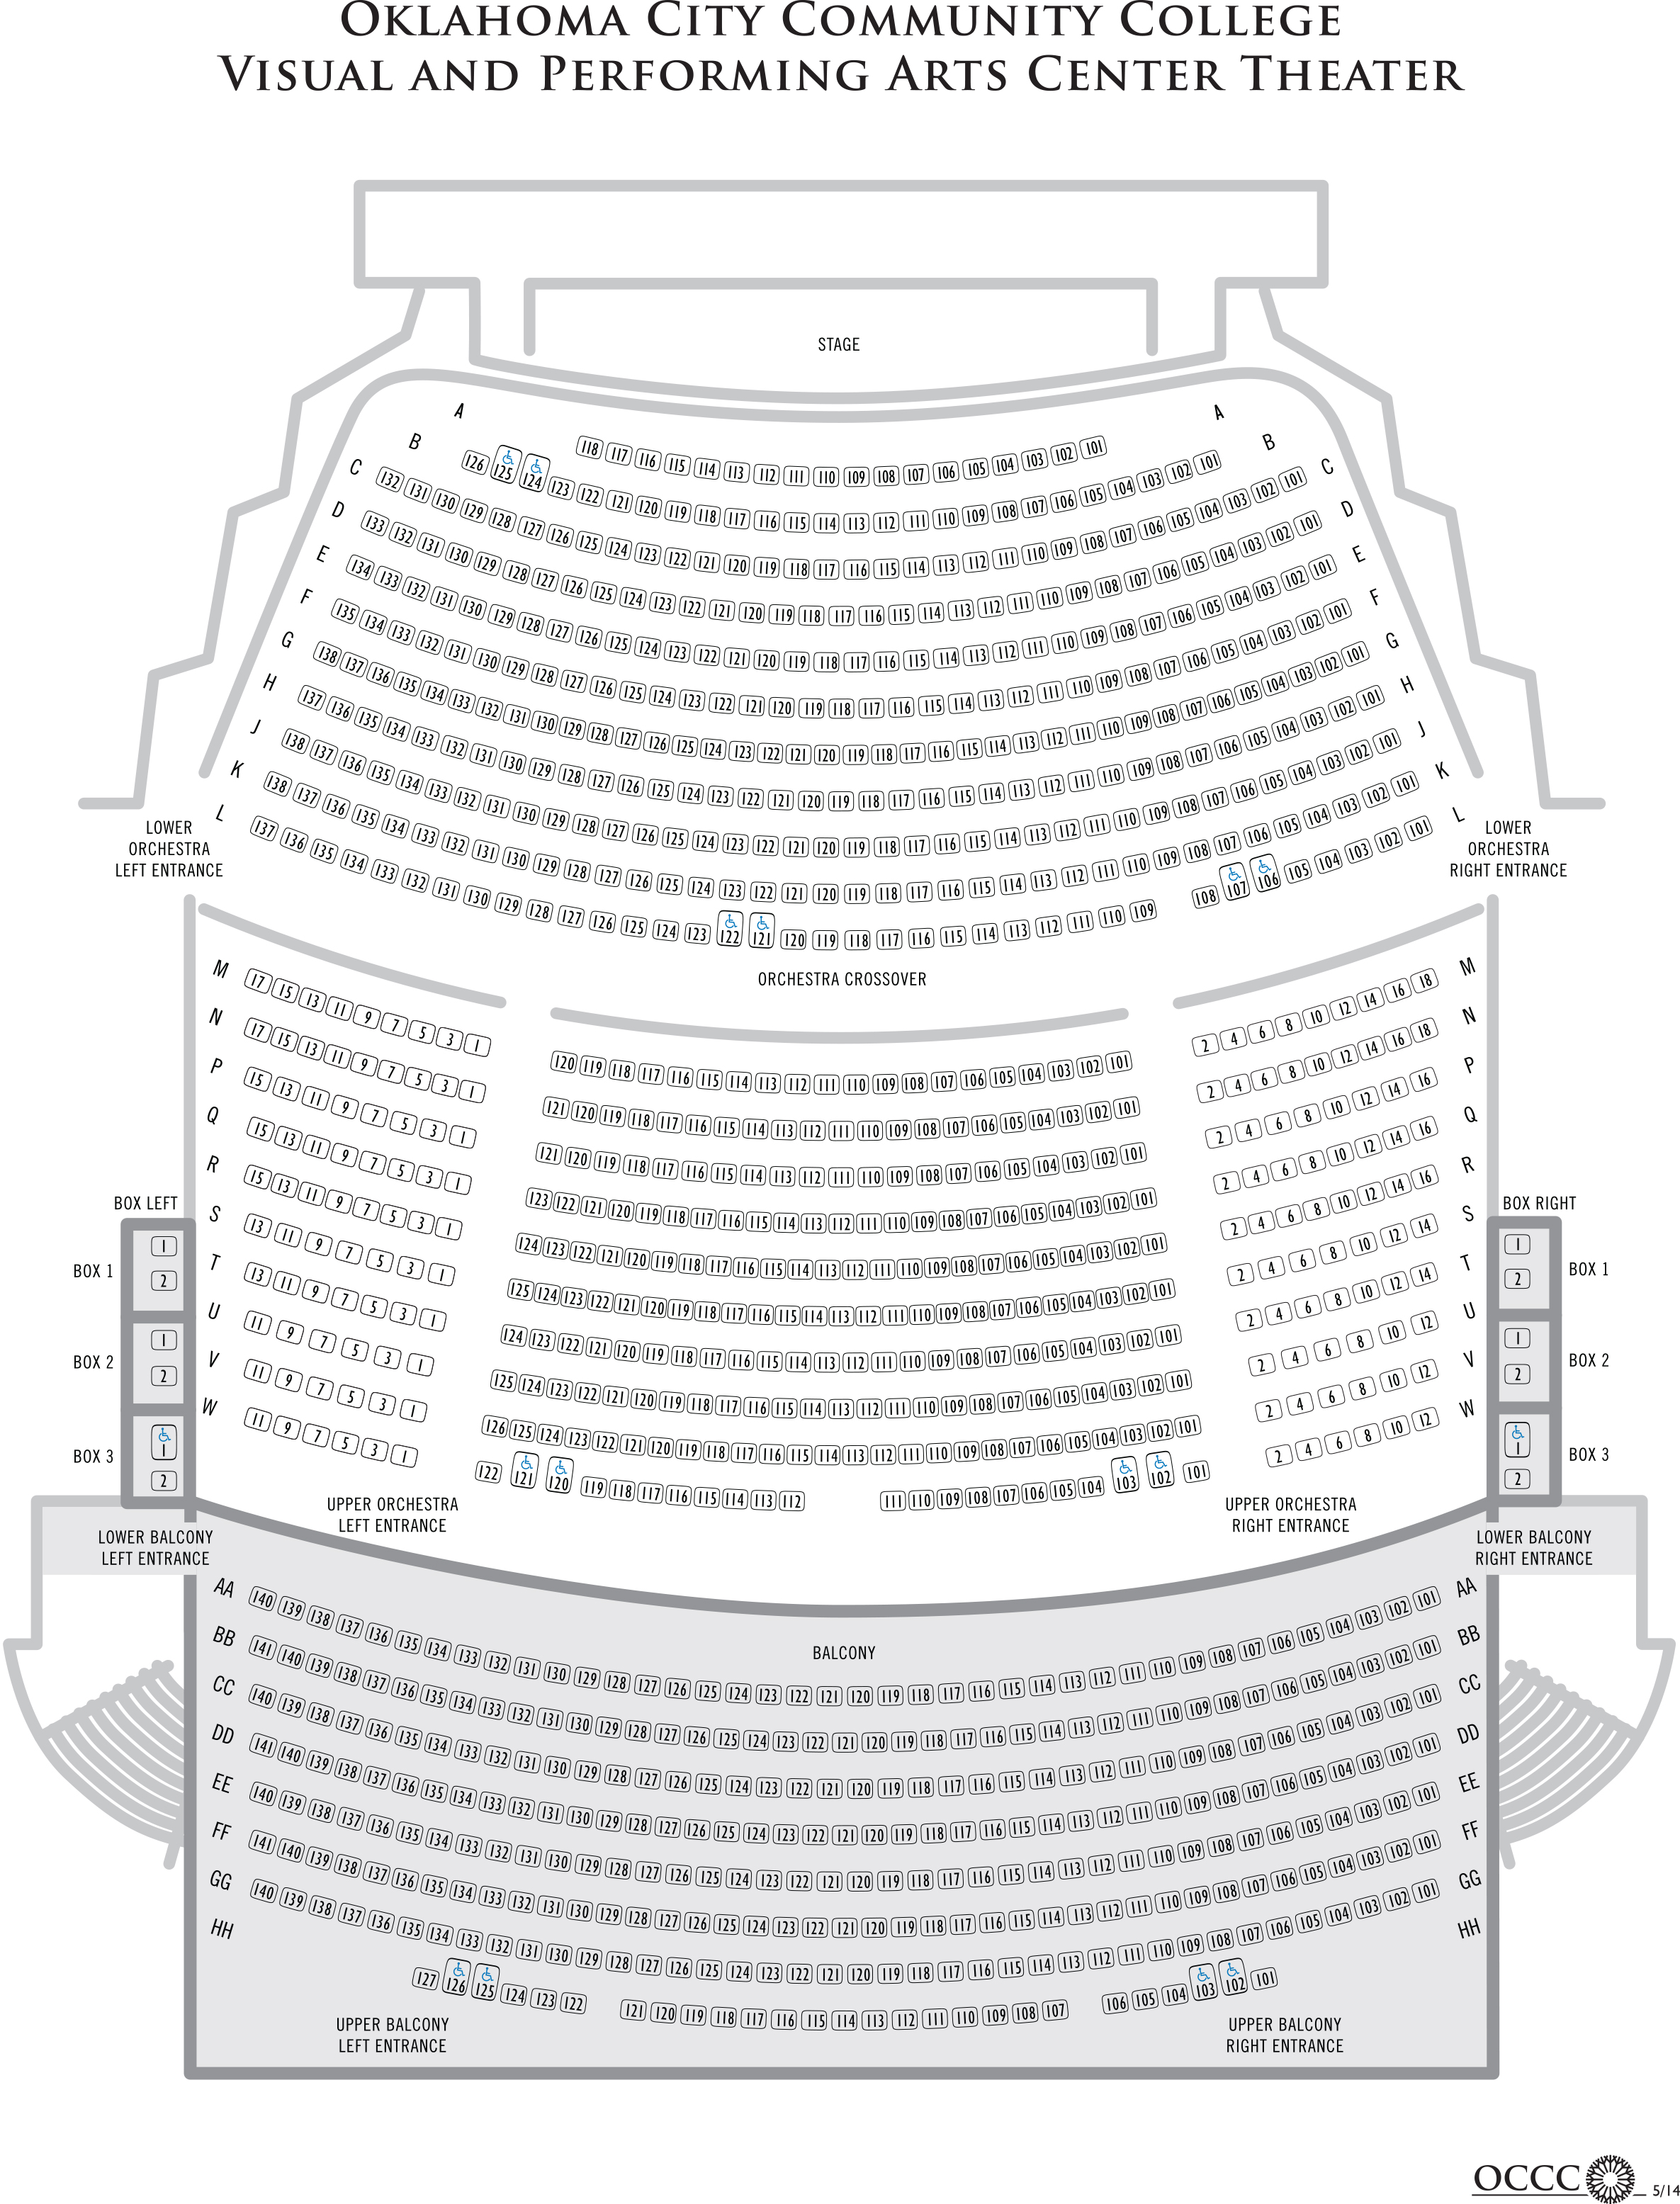 Hudson Performance Hall Okc Seating Chart